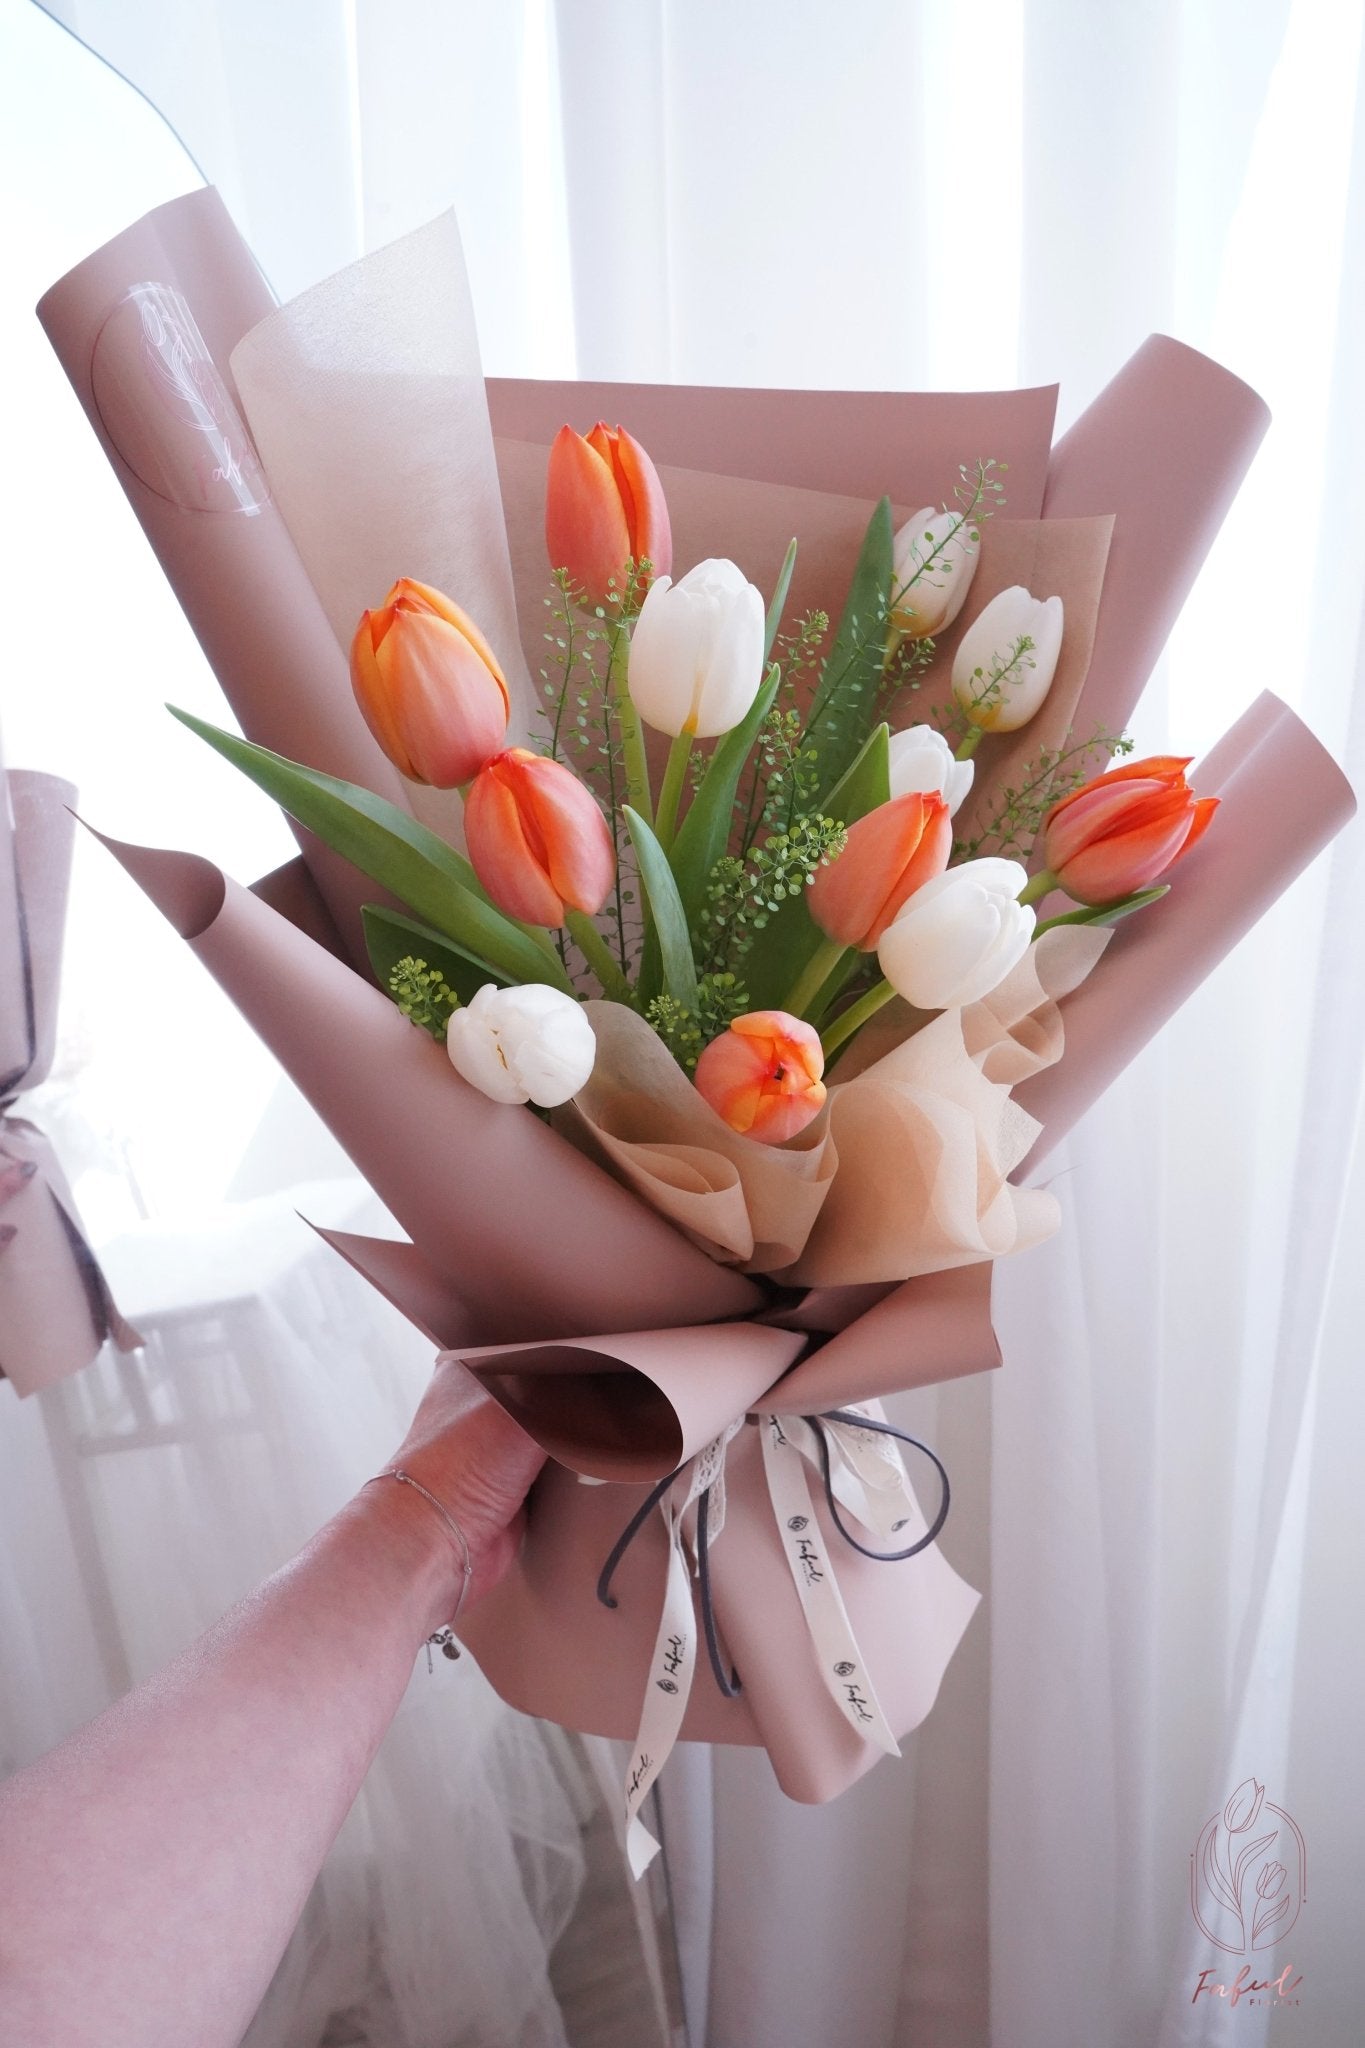 Tulip (2 Colors) - Fresh flowers, Tulips- 12 stems - Orange - White - Anniversary - Birthday - Bouquet - 3